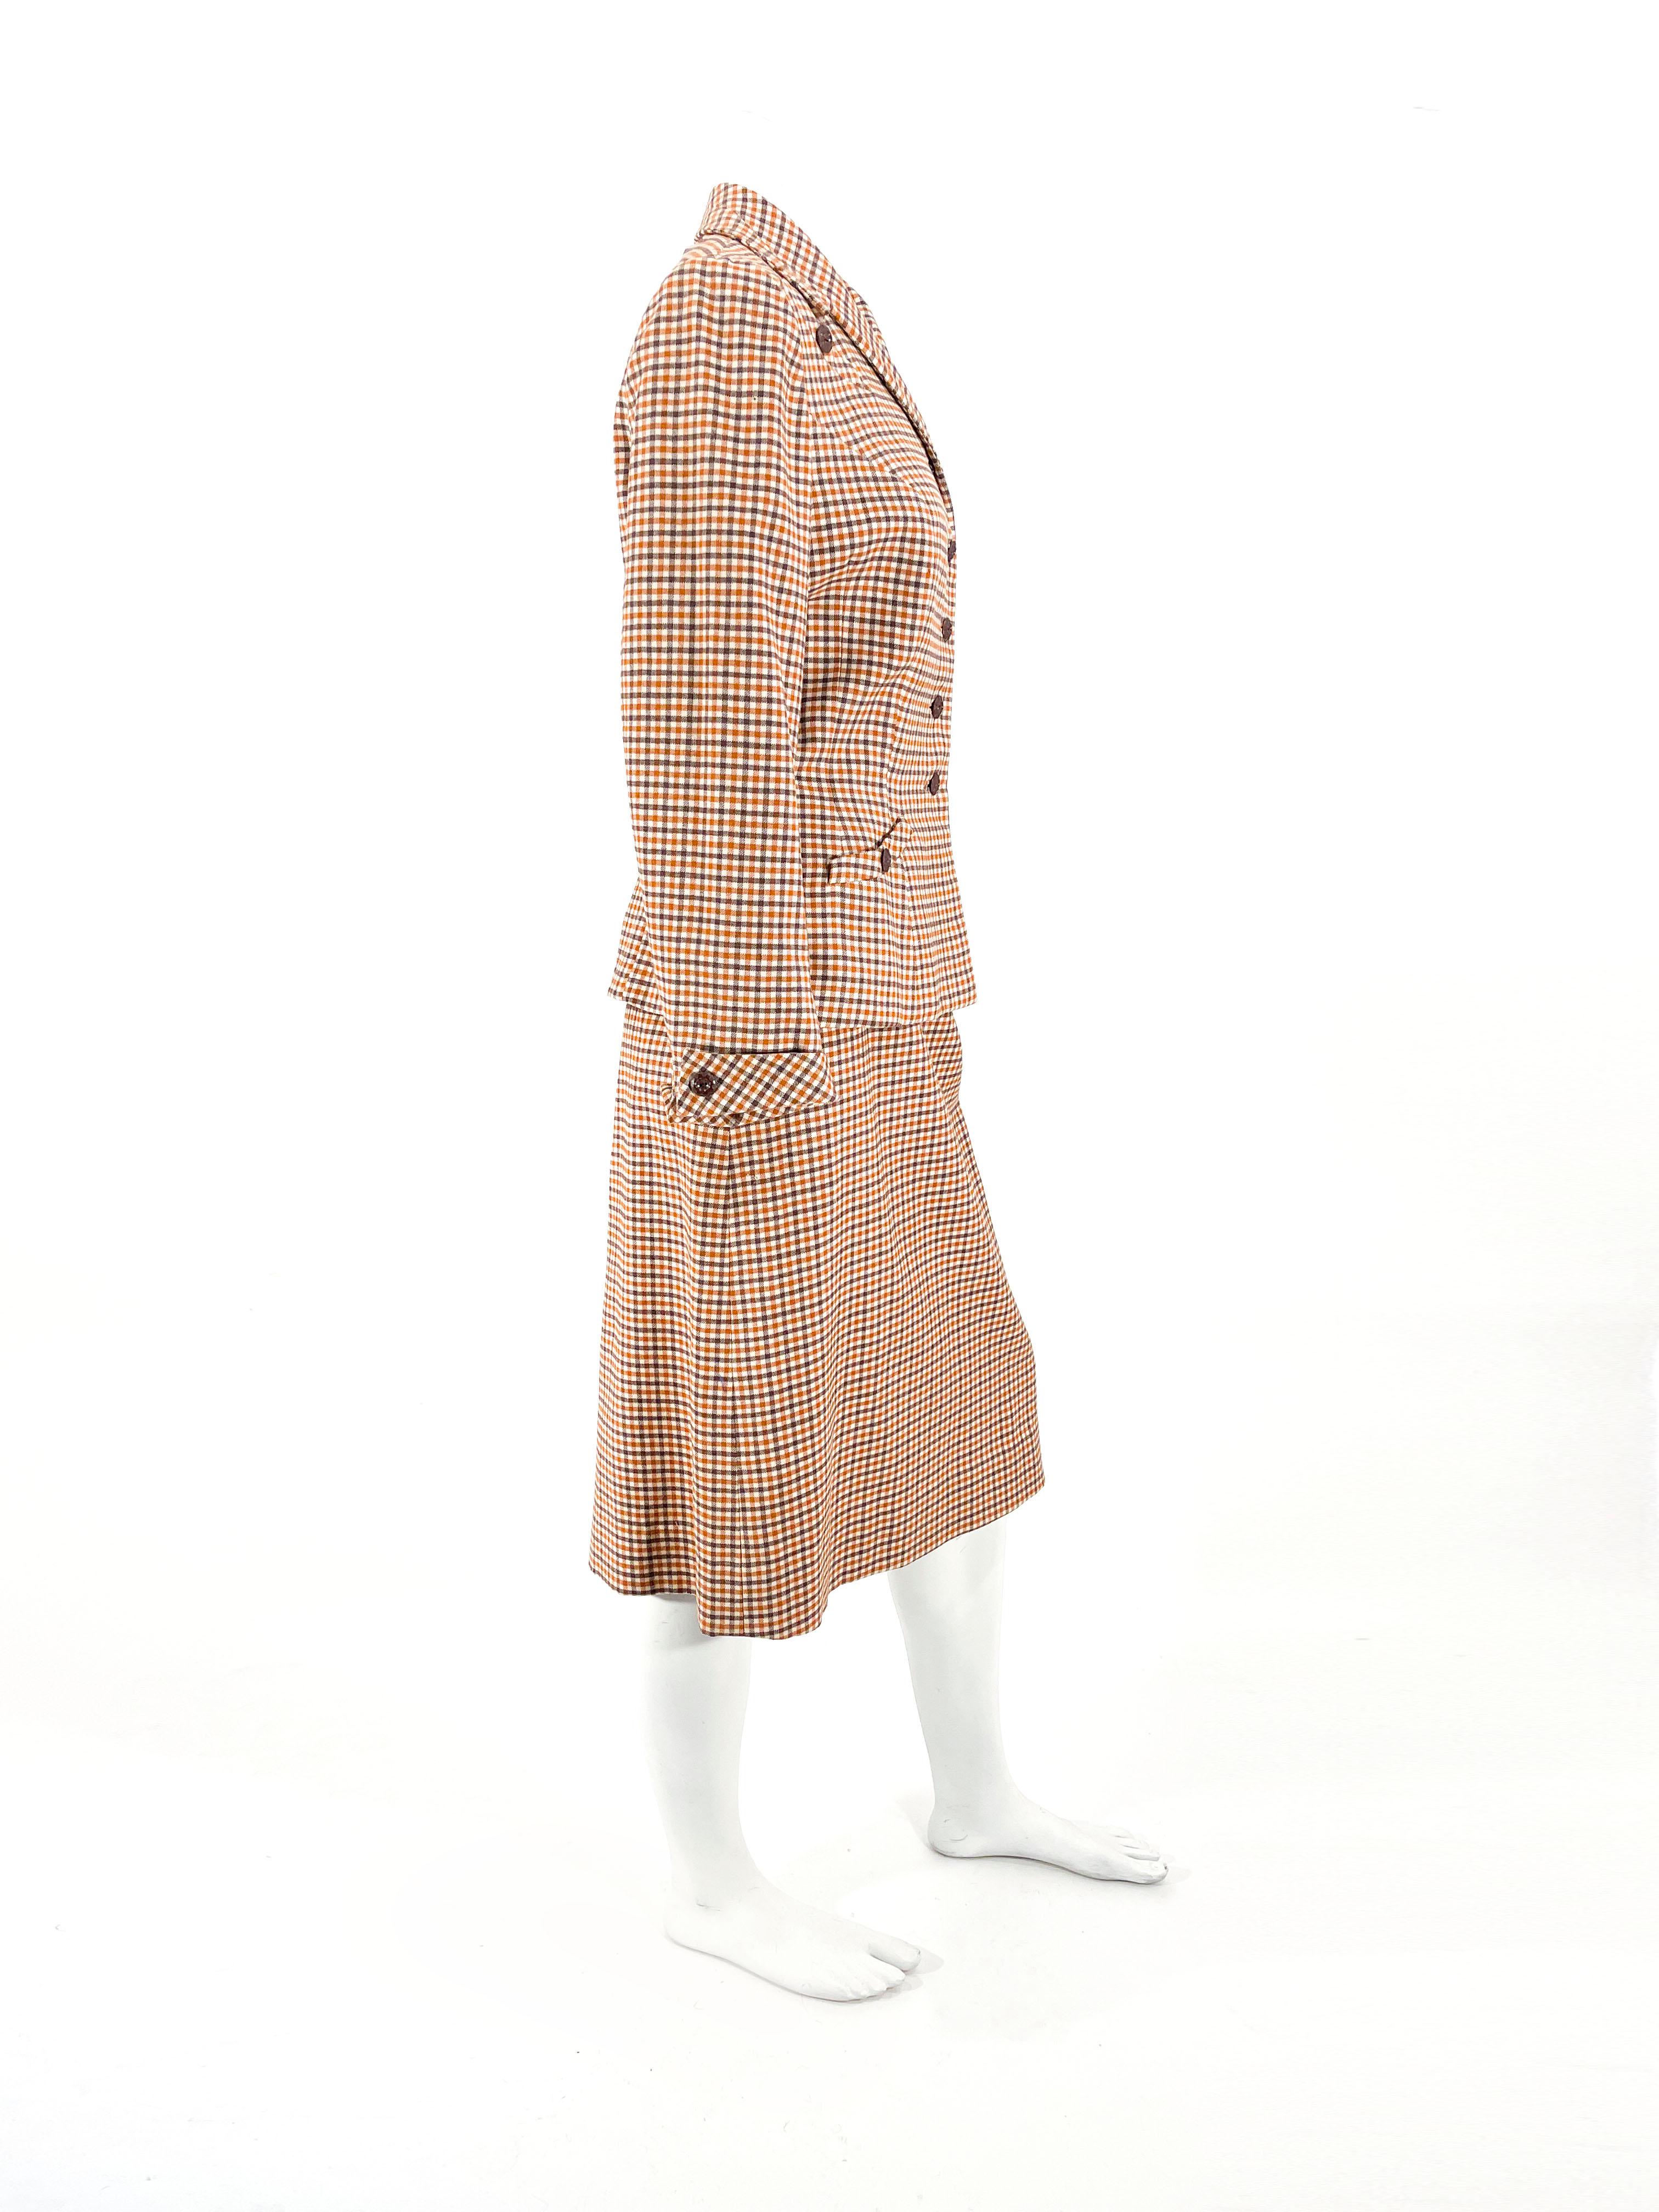 1940's Plaid Wool Suit For Sale 1